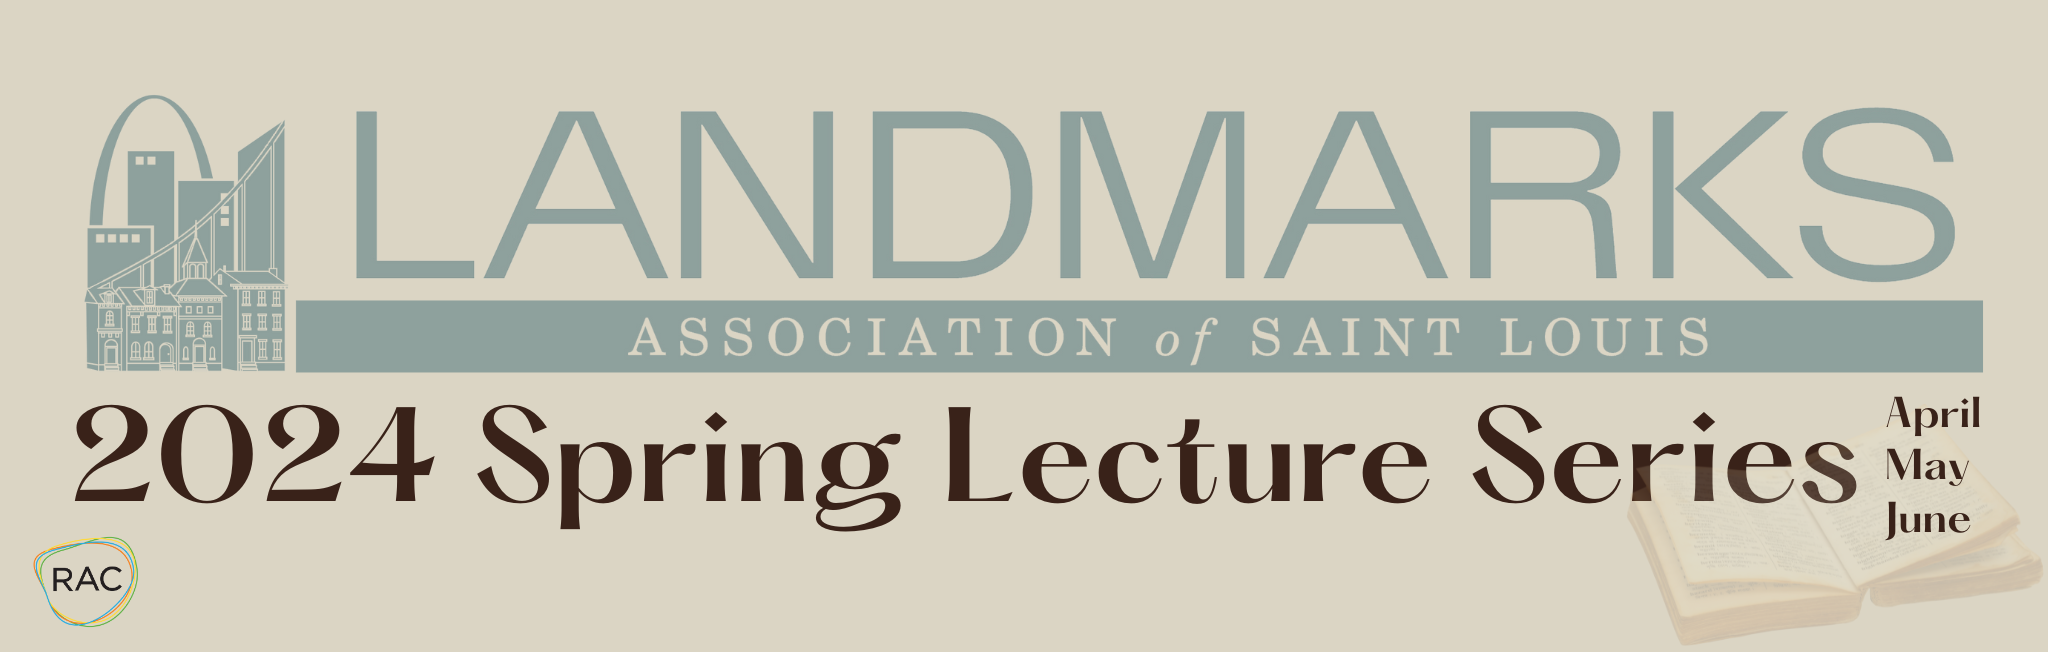 2024 Landmarks Spring Lecture Series